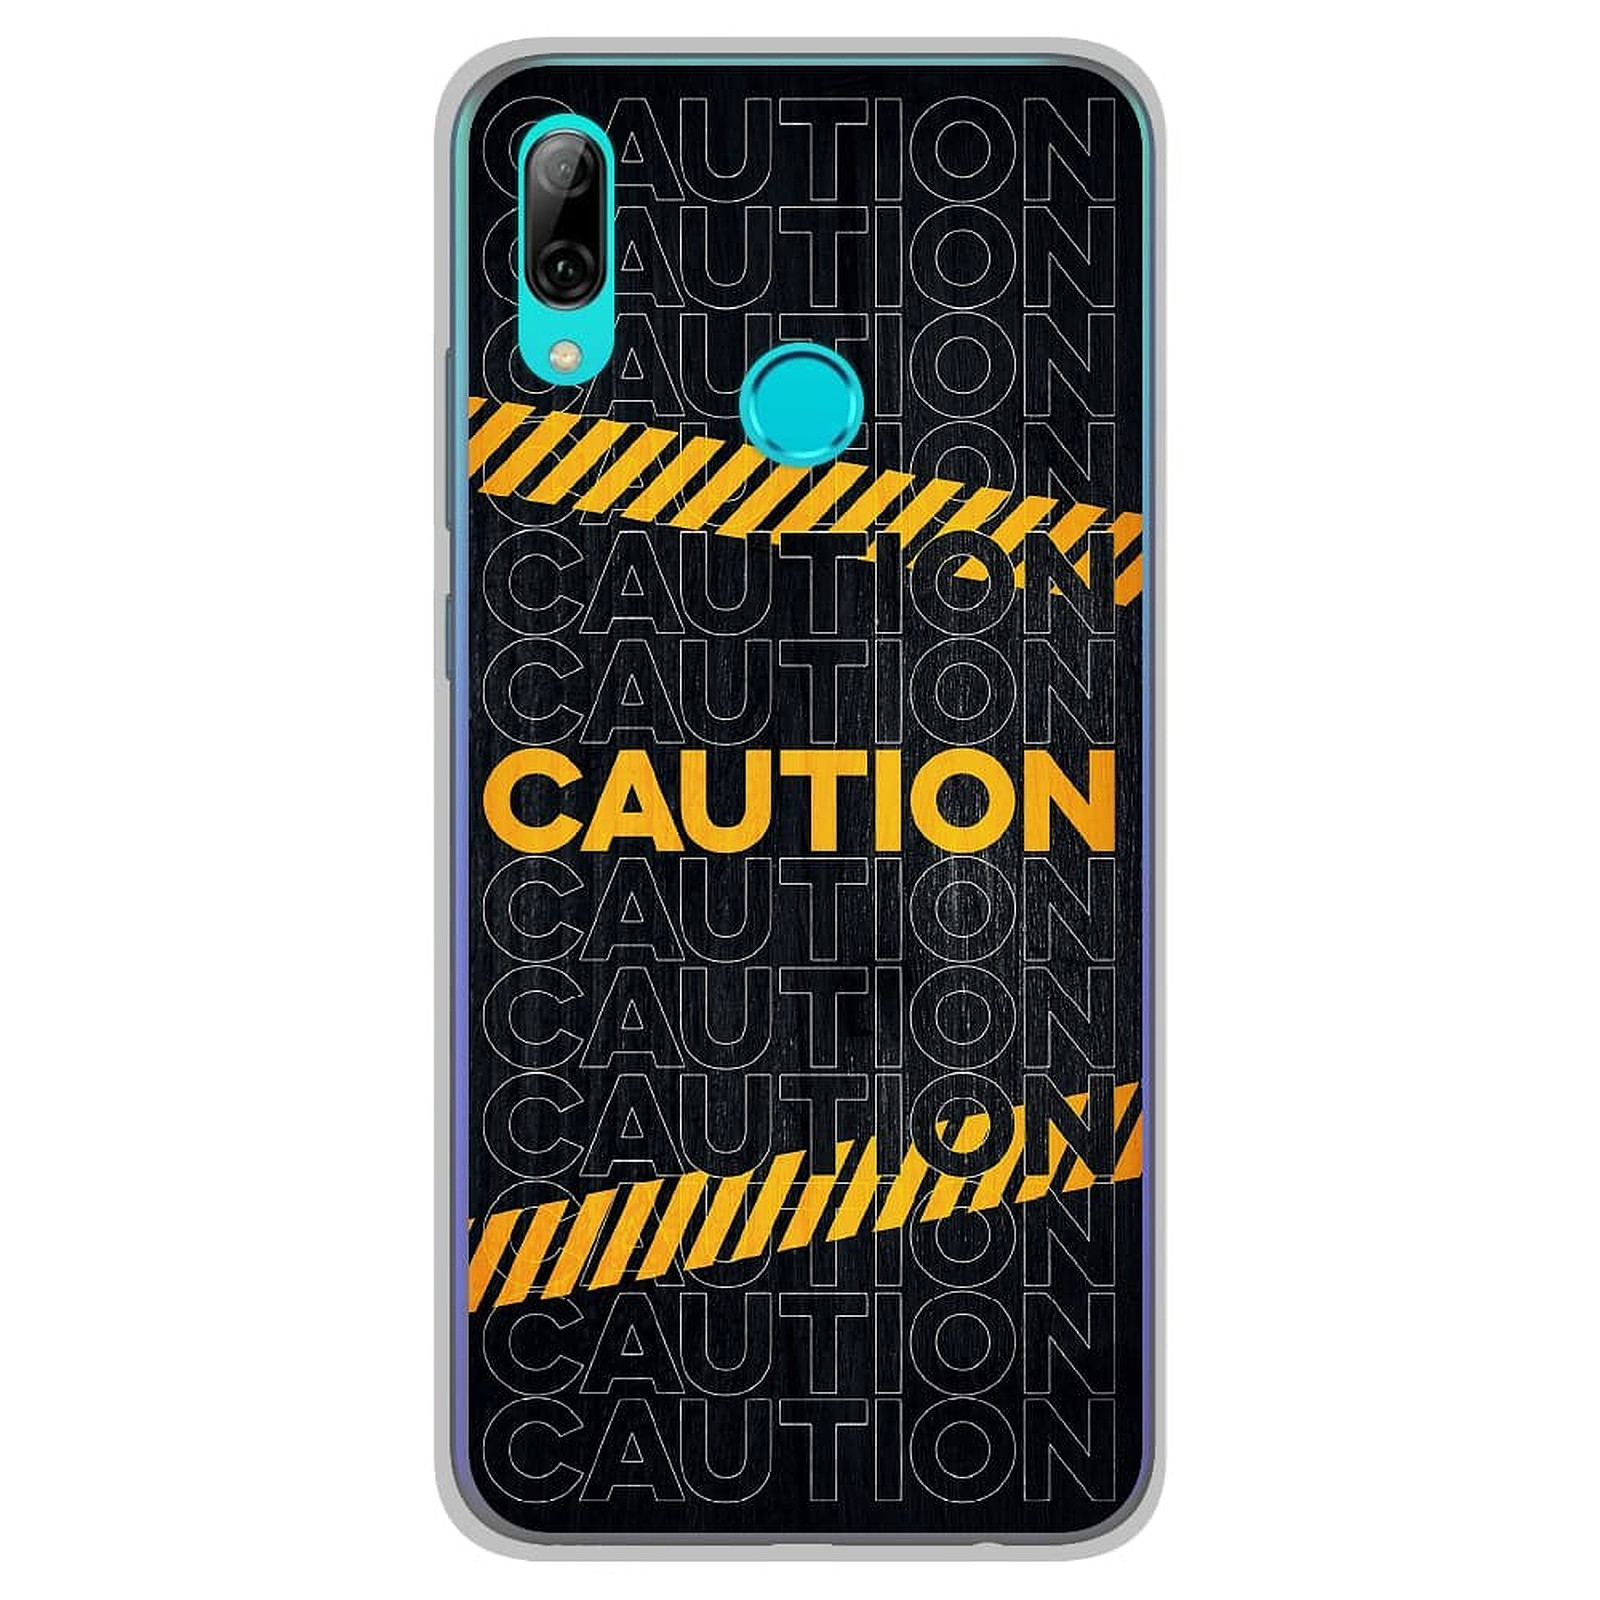 1001 Coques Coque silicone gel Huawei P Smart 2019 motif Caution - Coque telephone 1001Coques